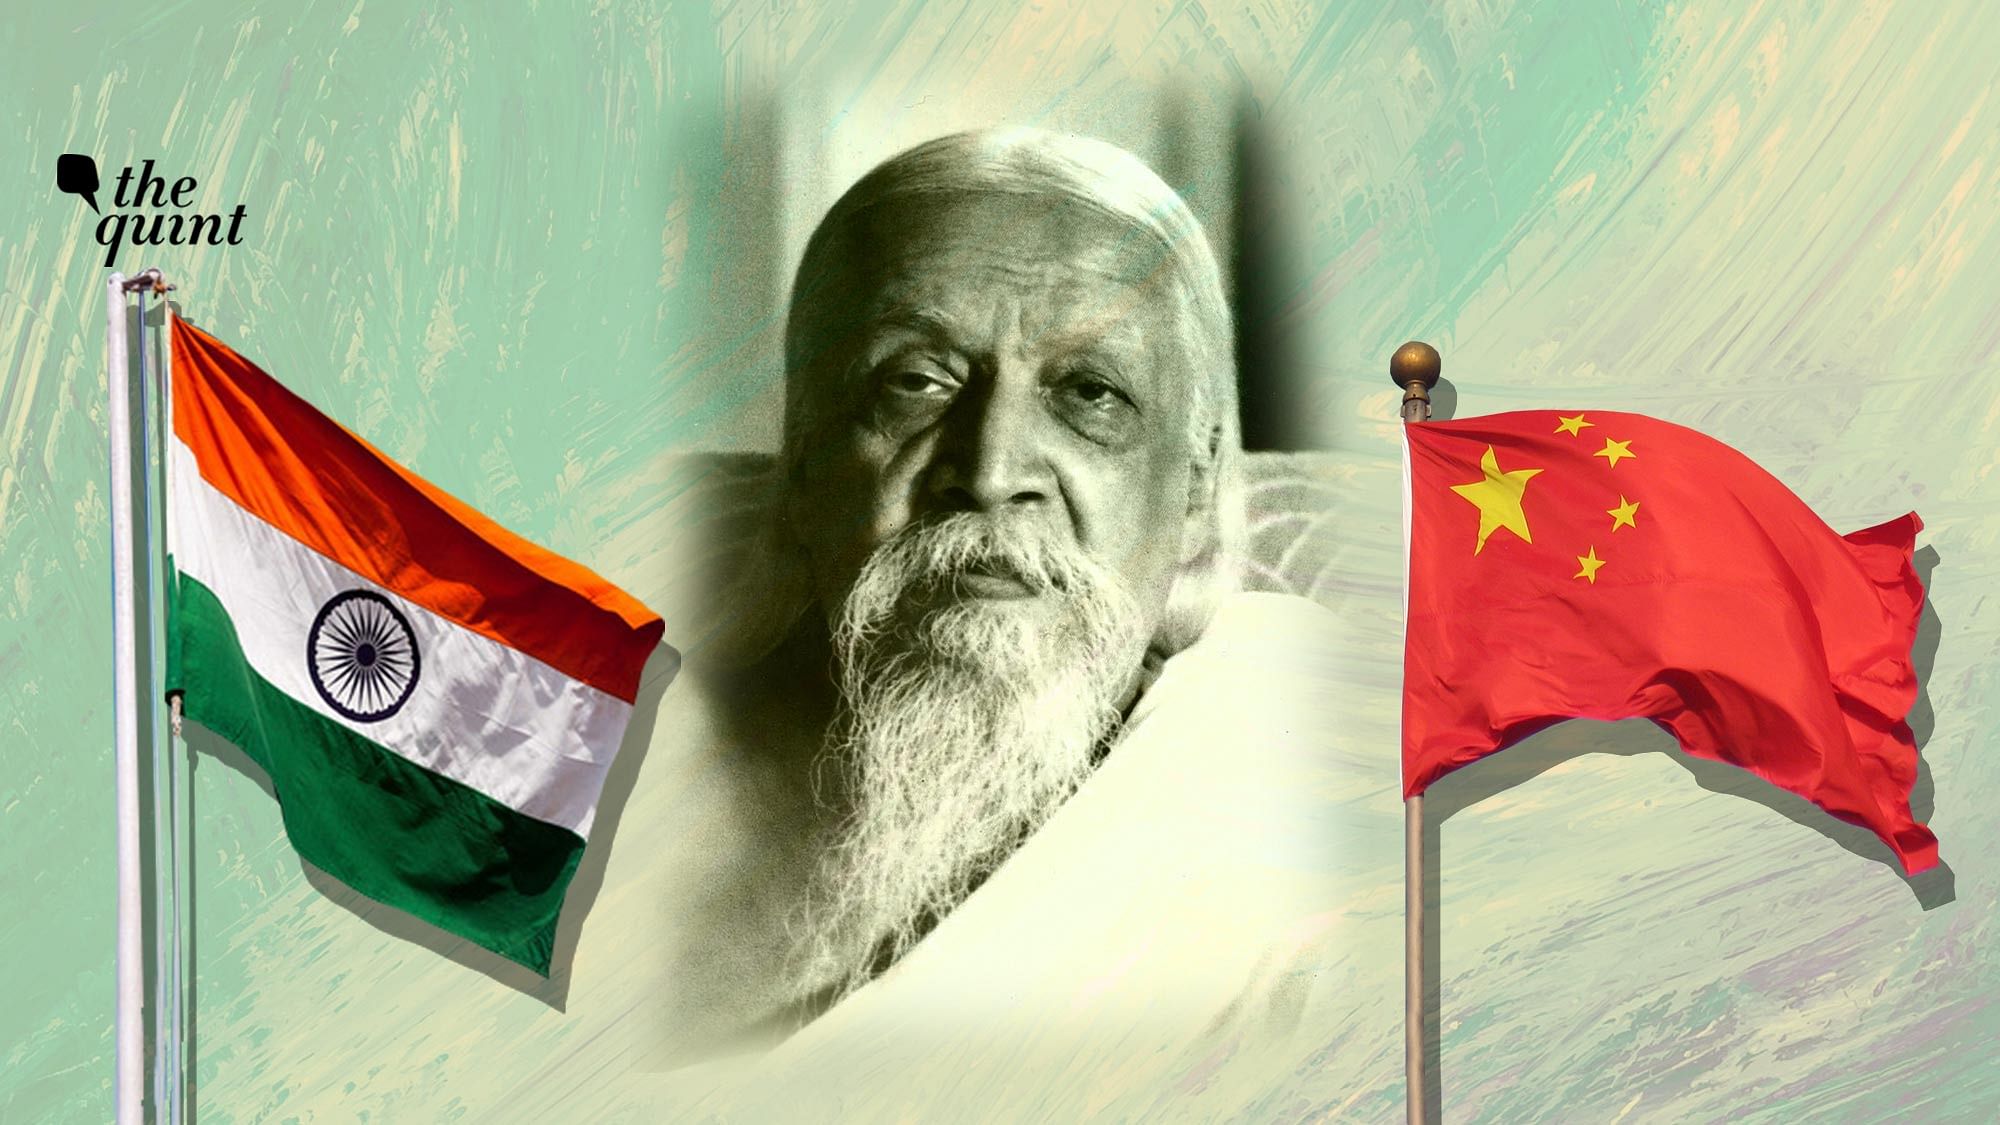 Image of spiritual leader Sri Aurobindo and India and China flags, used for representational purposes.